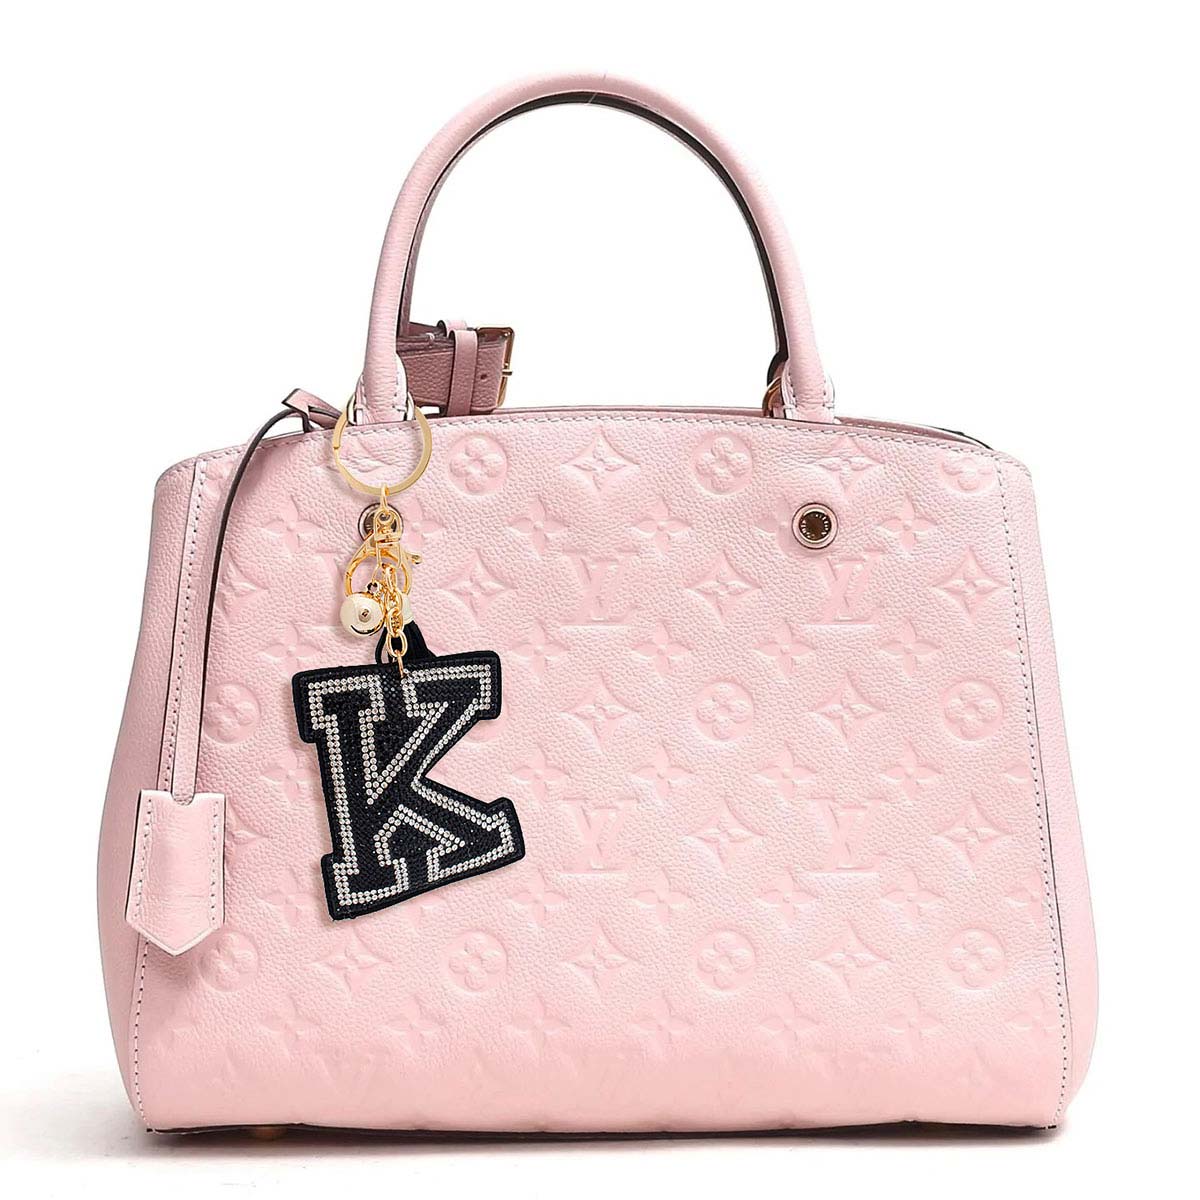 K Black Keychain Bag Charm